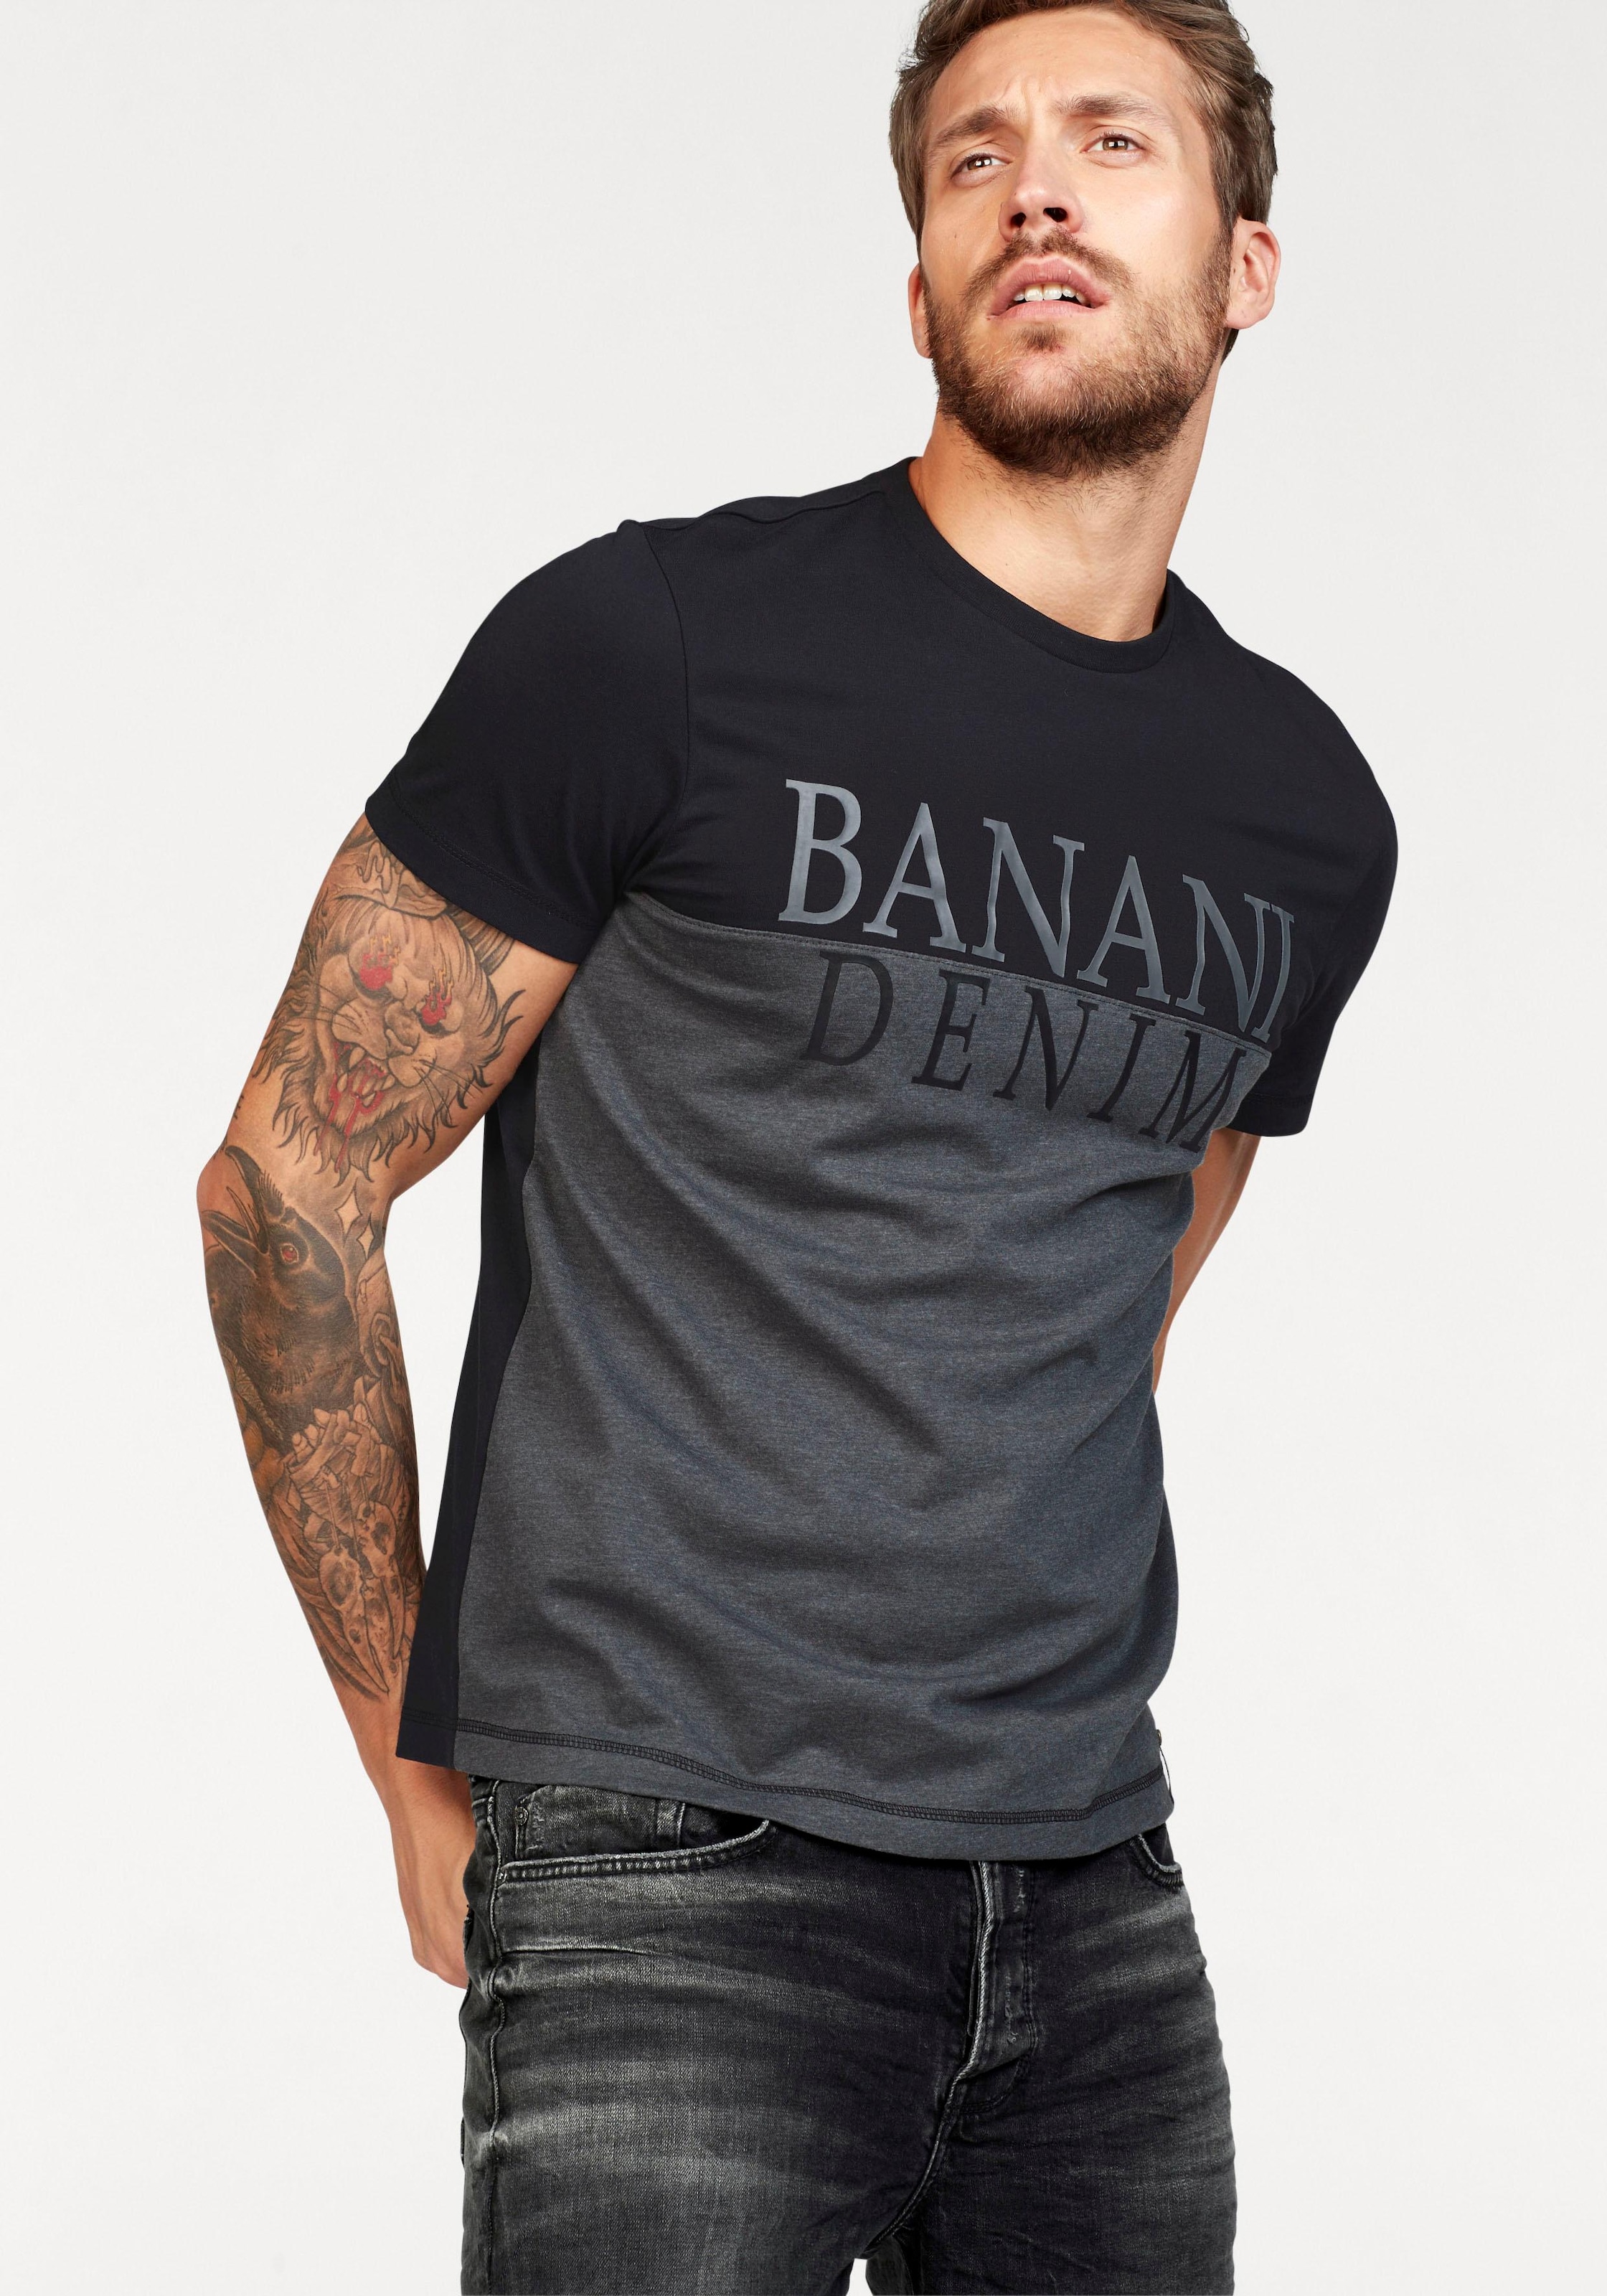 Bruno OTTO bei online T-Shirt shoppen Banani